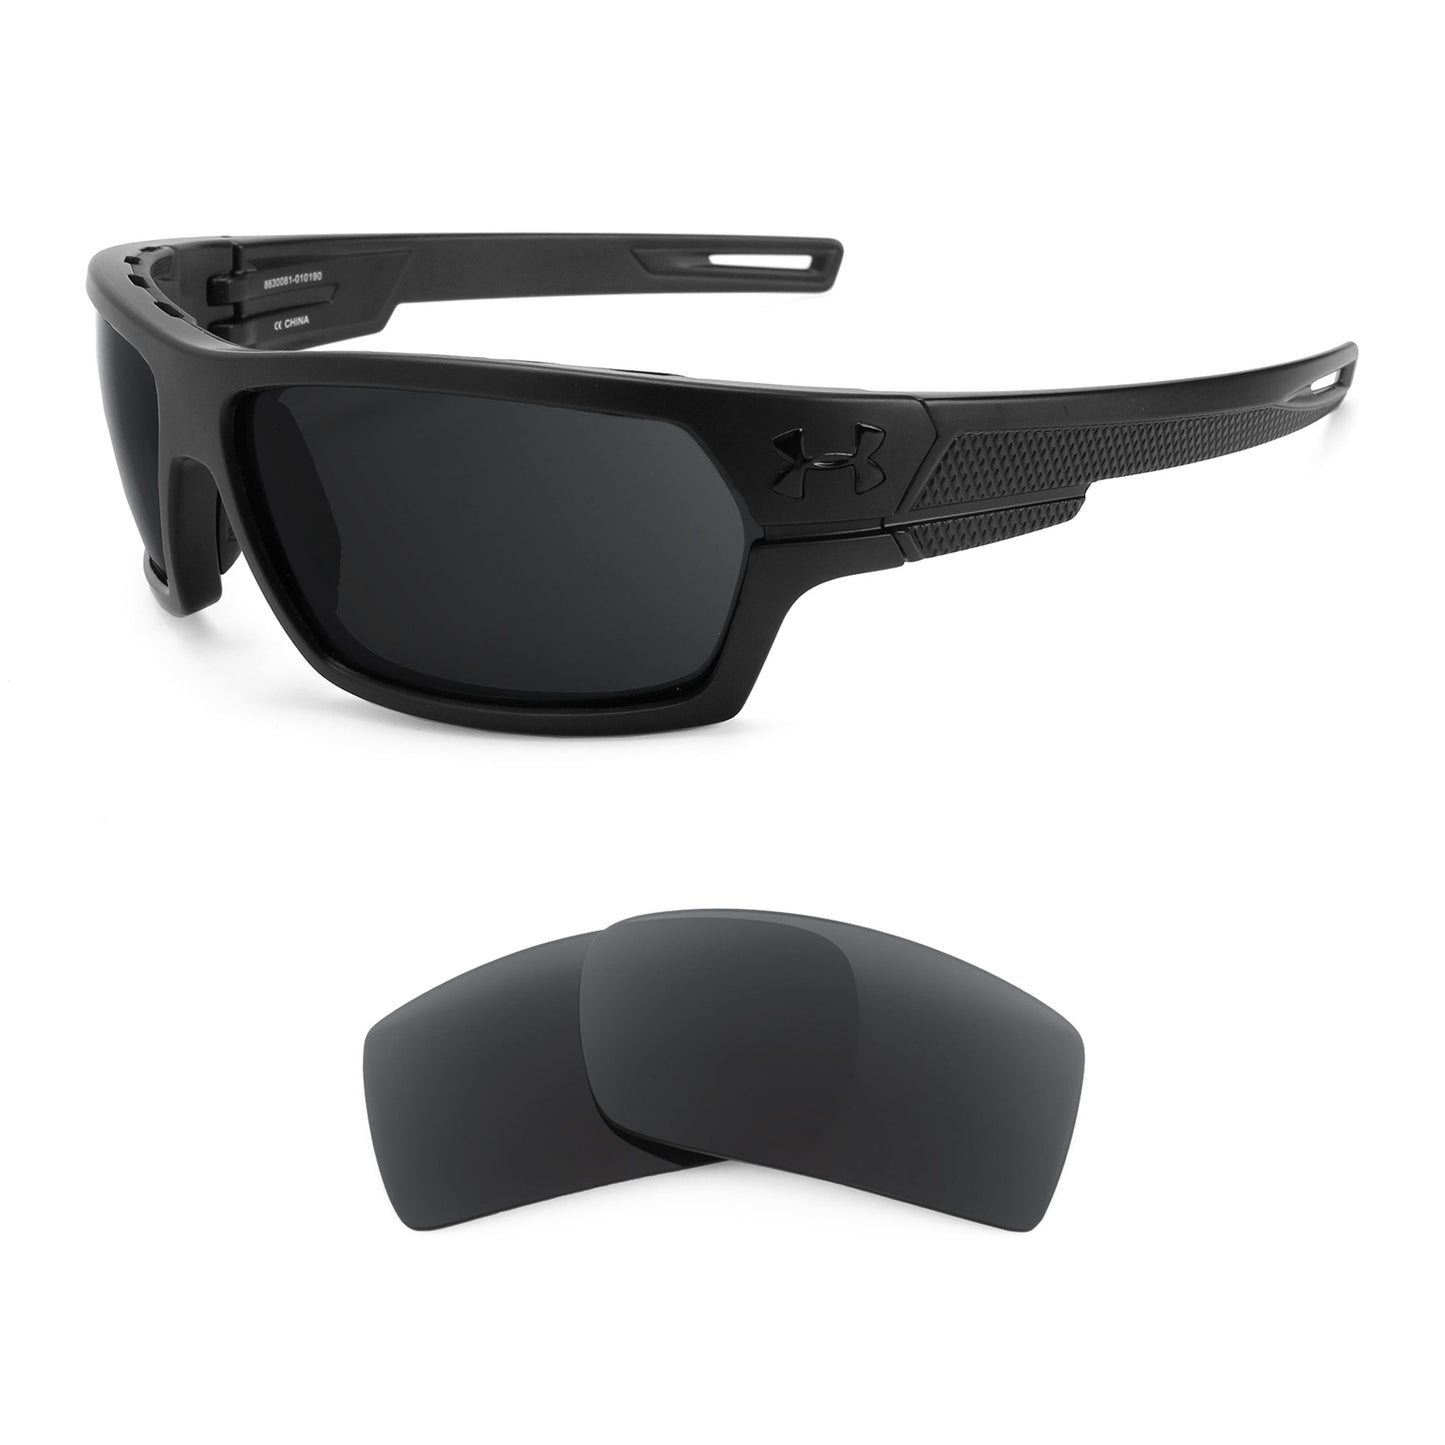 Under Armour Battlewrap sunglasses with replacement lenses